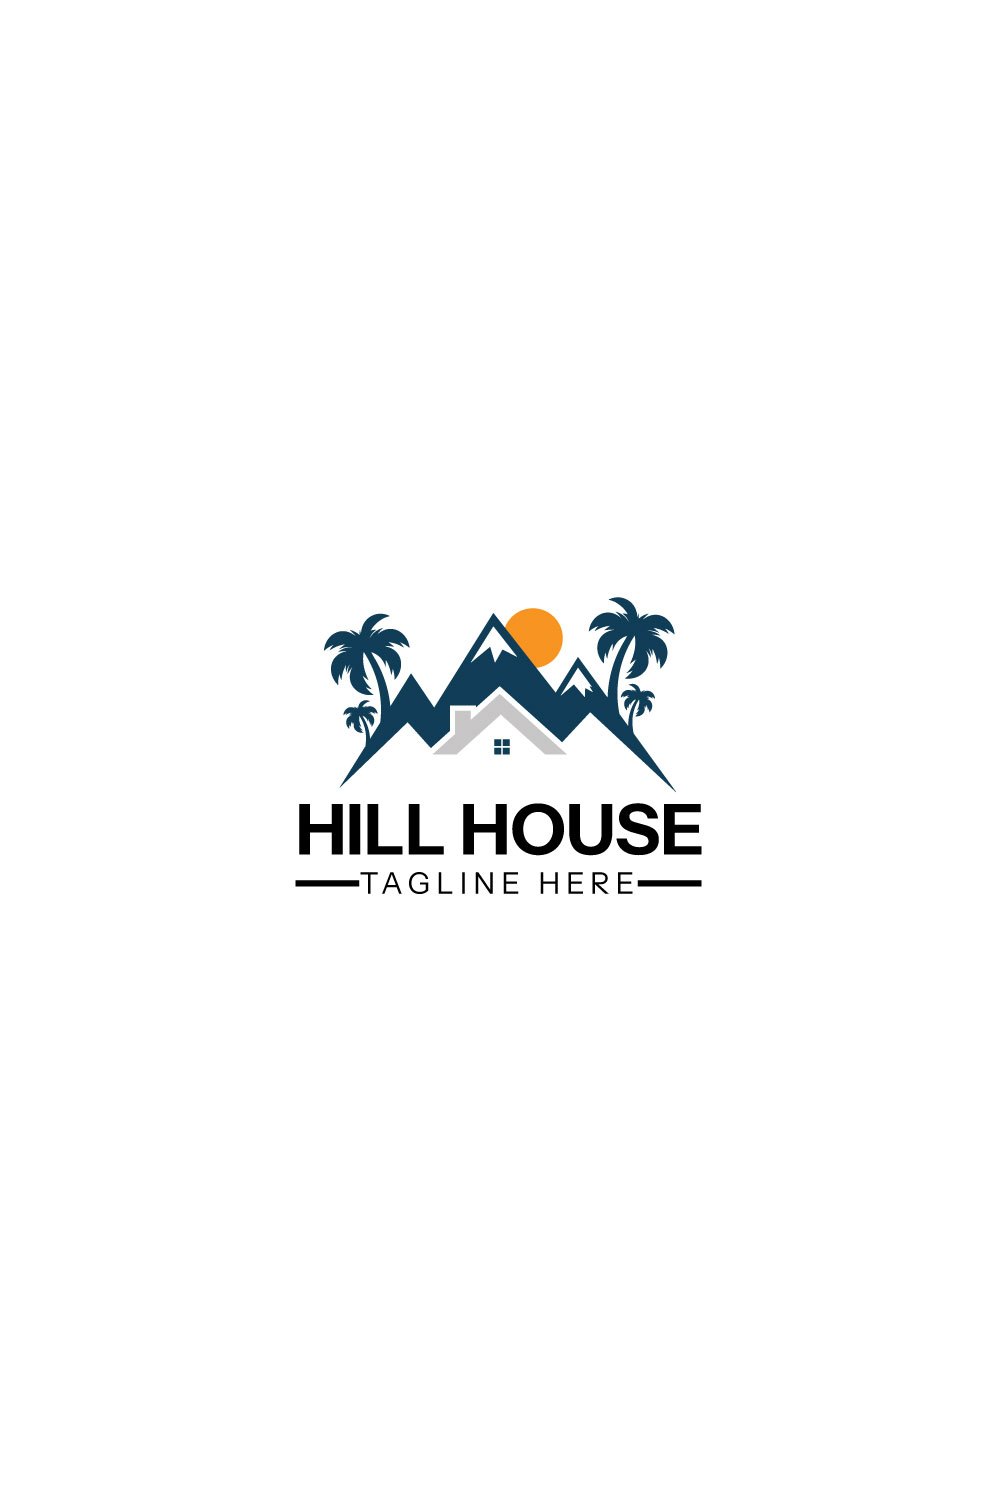 Nature Mountain house logo inspiration, hill real estate logo design vector pinterest preview image.